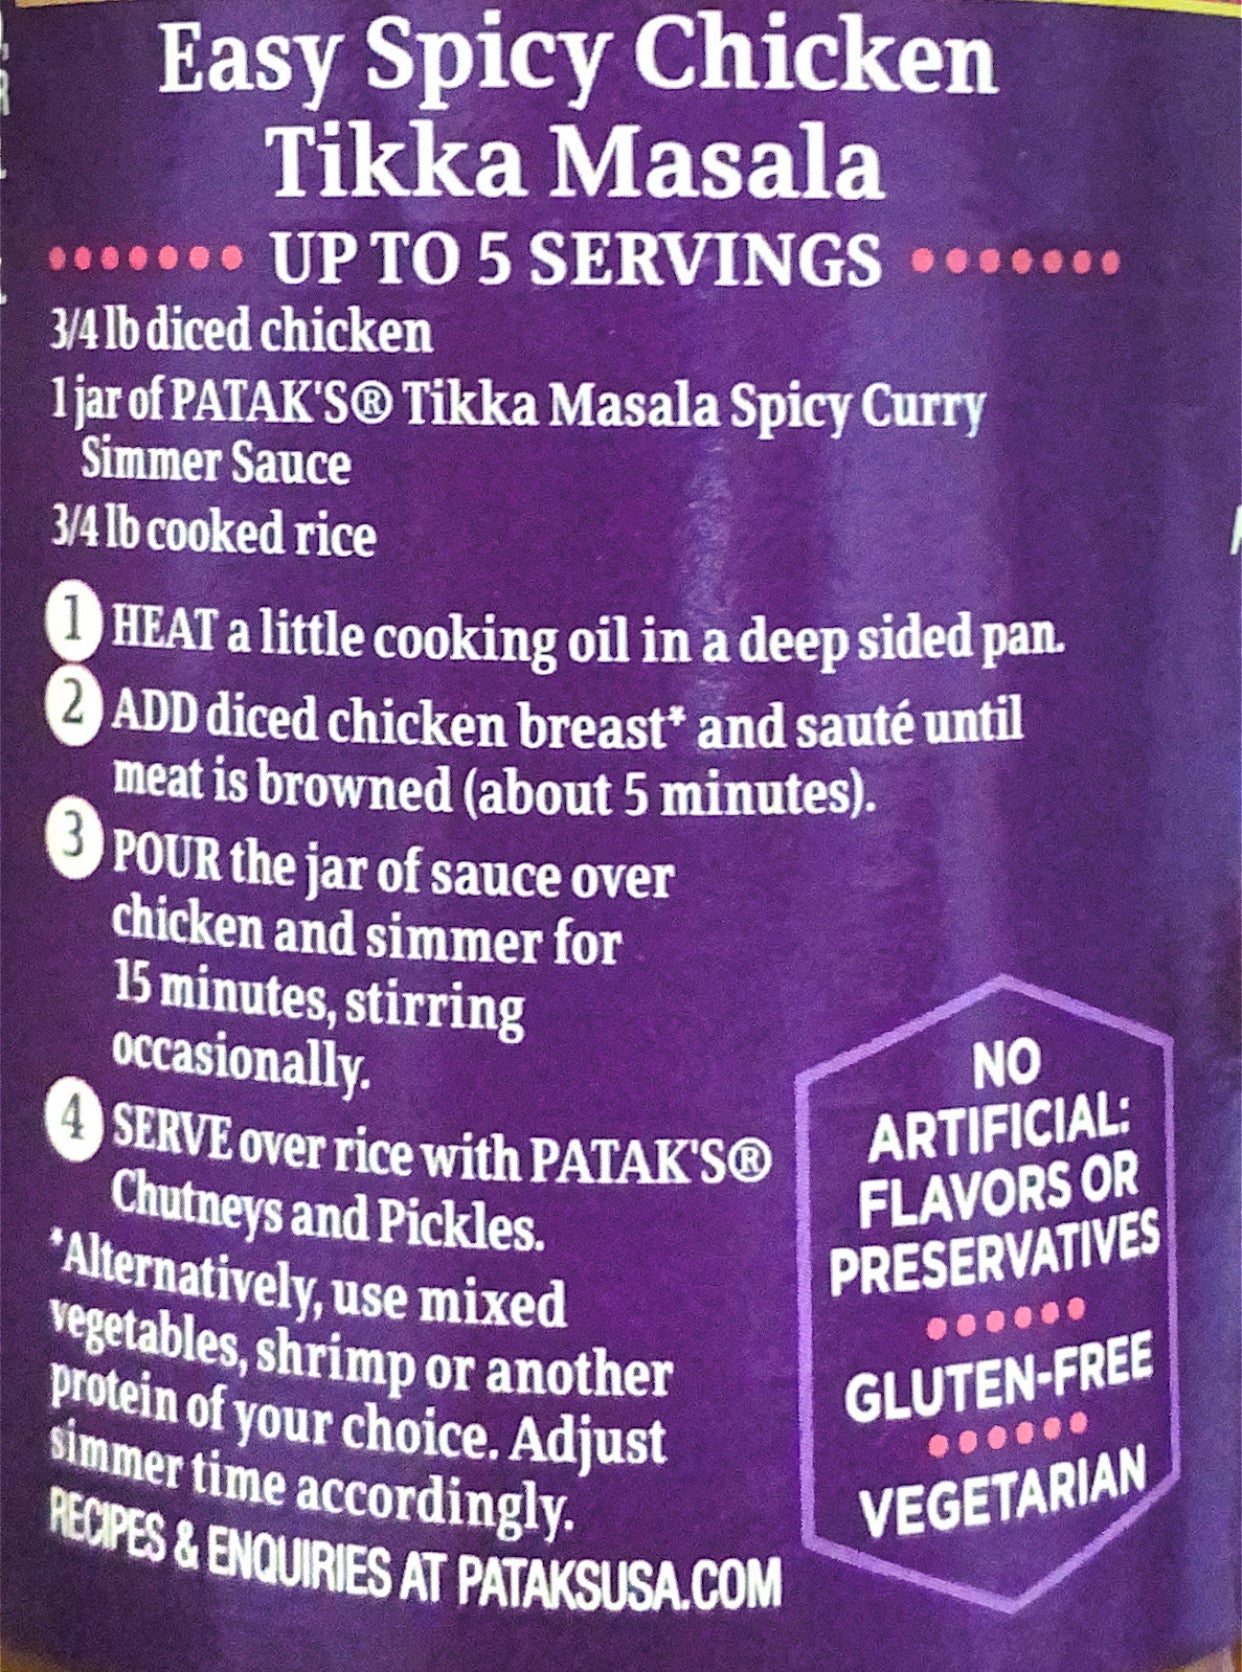 Tikka Masala Spicy Curry Simmer Sauce